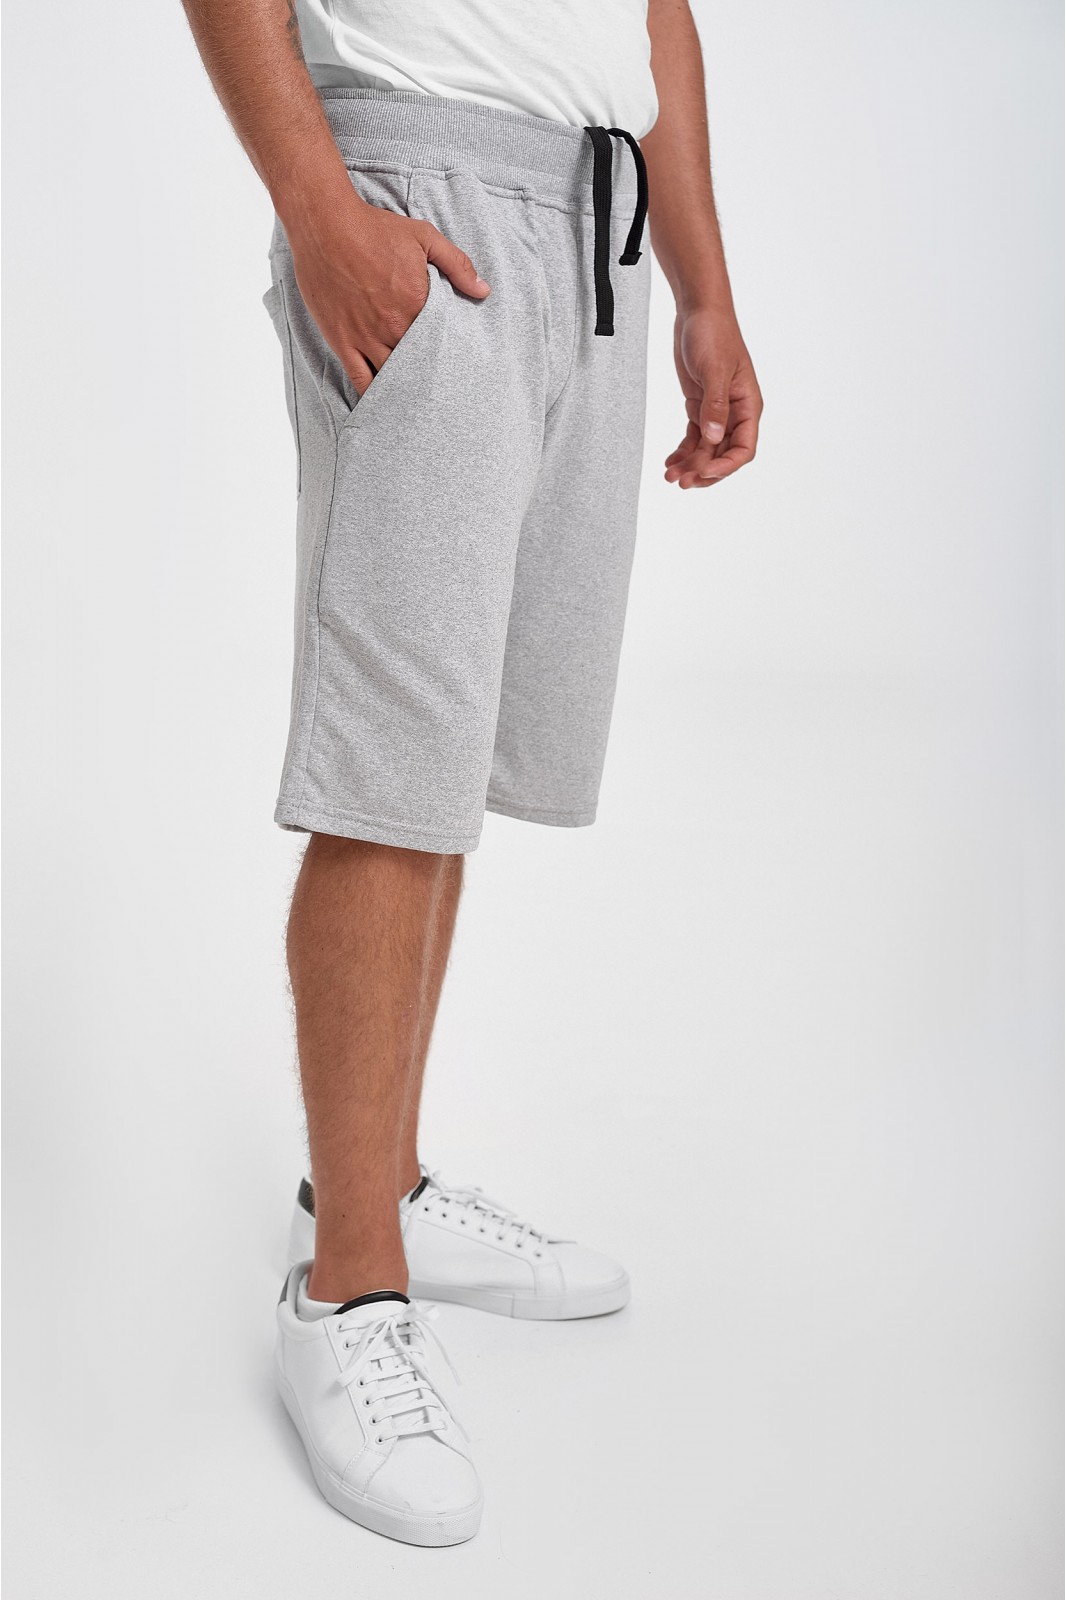 Mens Athletic shorts BODY MOVE 1114 Grey